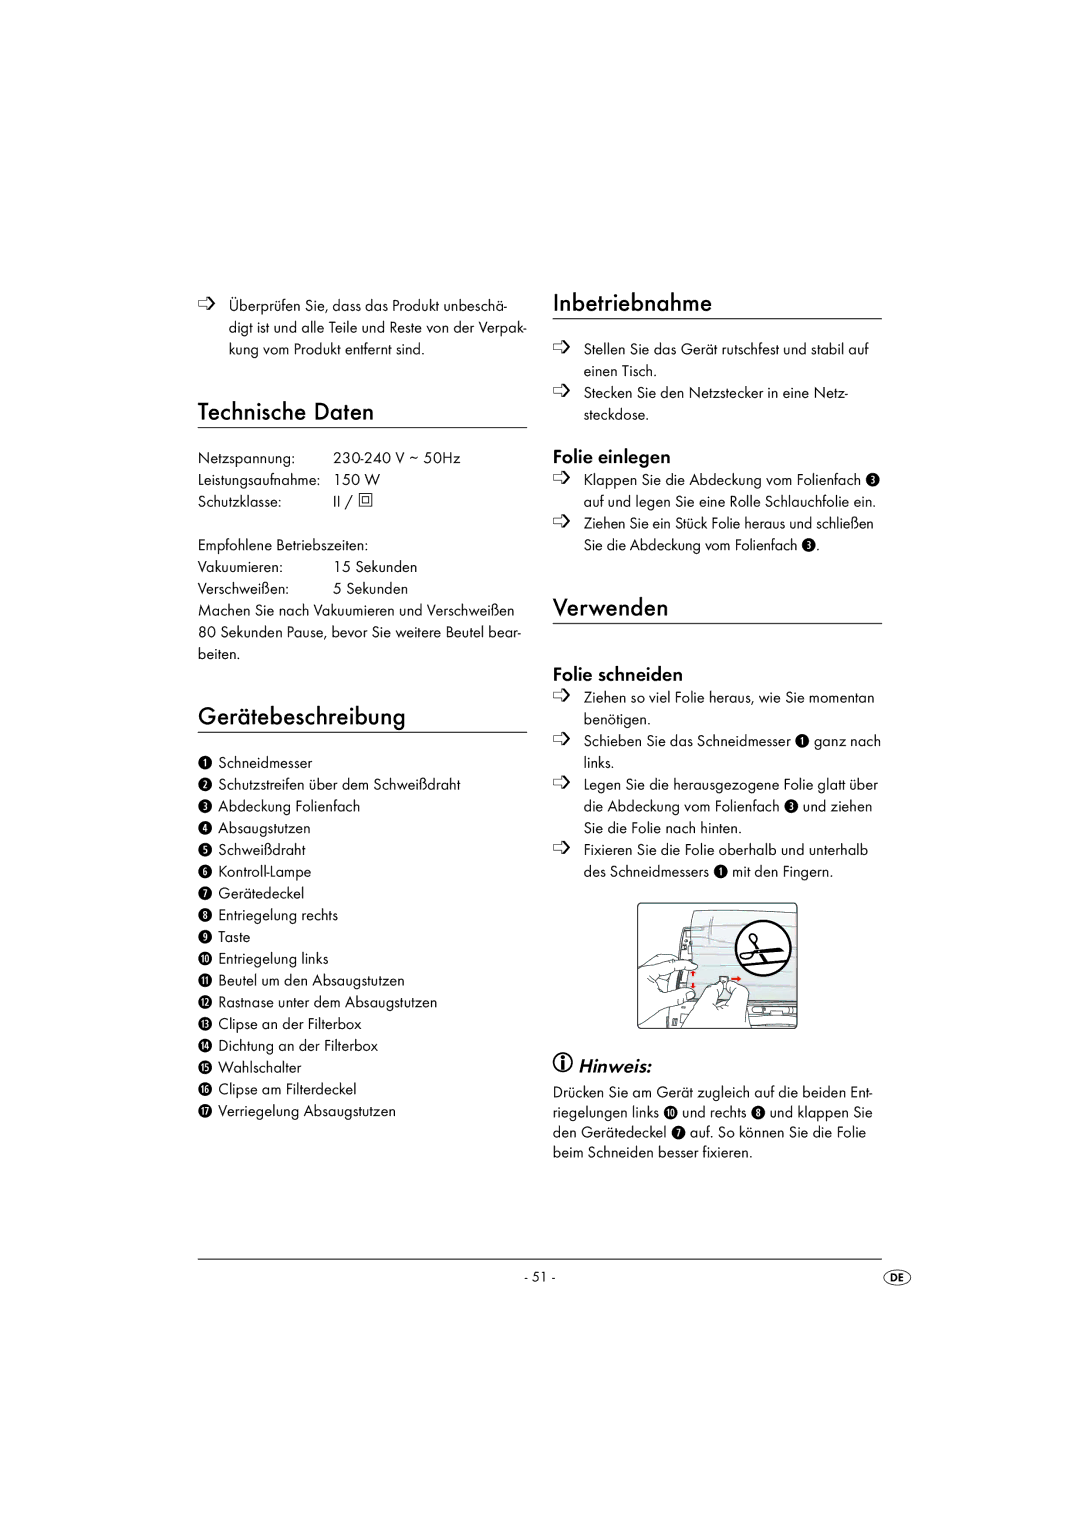 Kompernass KH 1605 manual Technische Daten, Gerätebeschreibung, Inbetriebnahme, Verwenden, Hinweis 